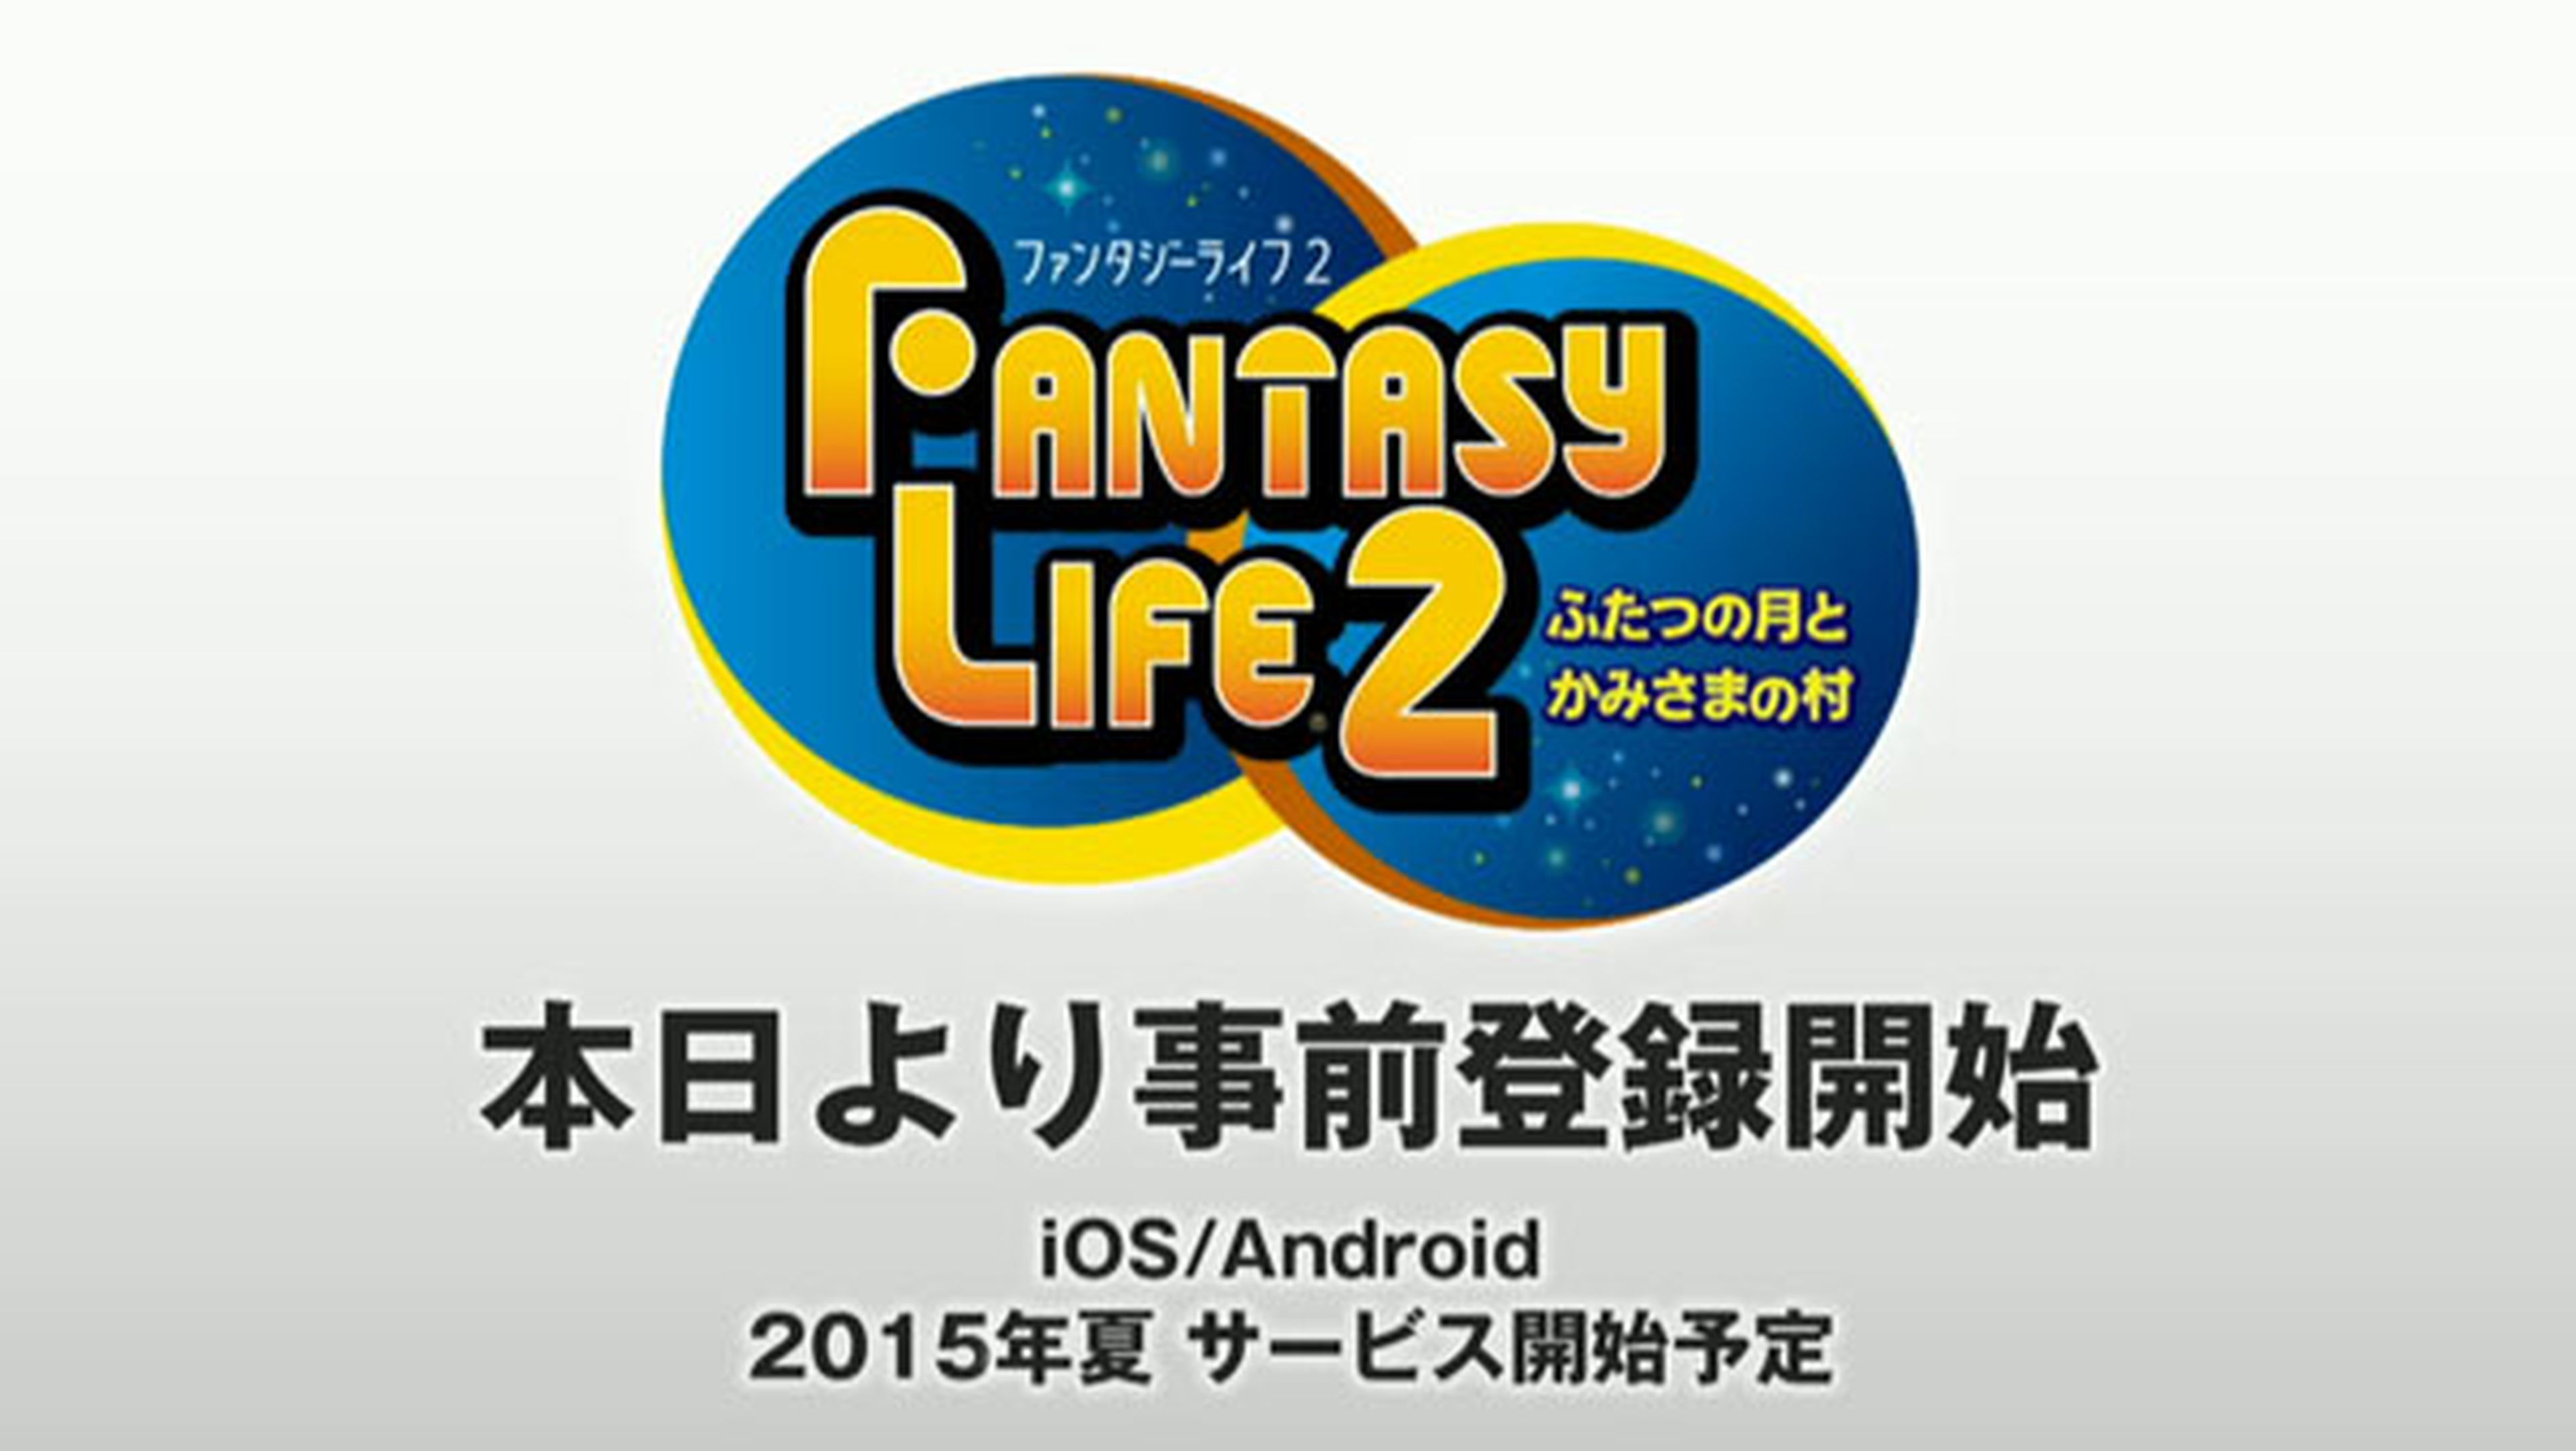 Level 5 presenta Yo-Kai Watch 3 y Fantasy Life 2